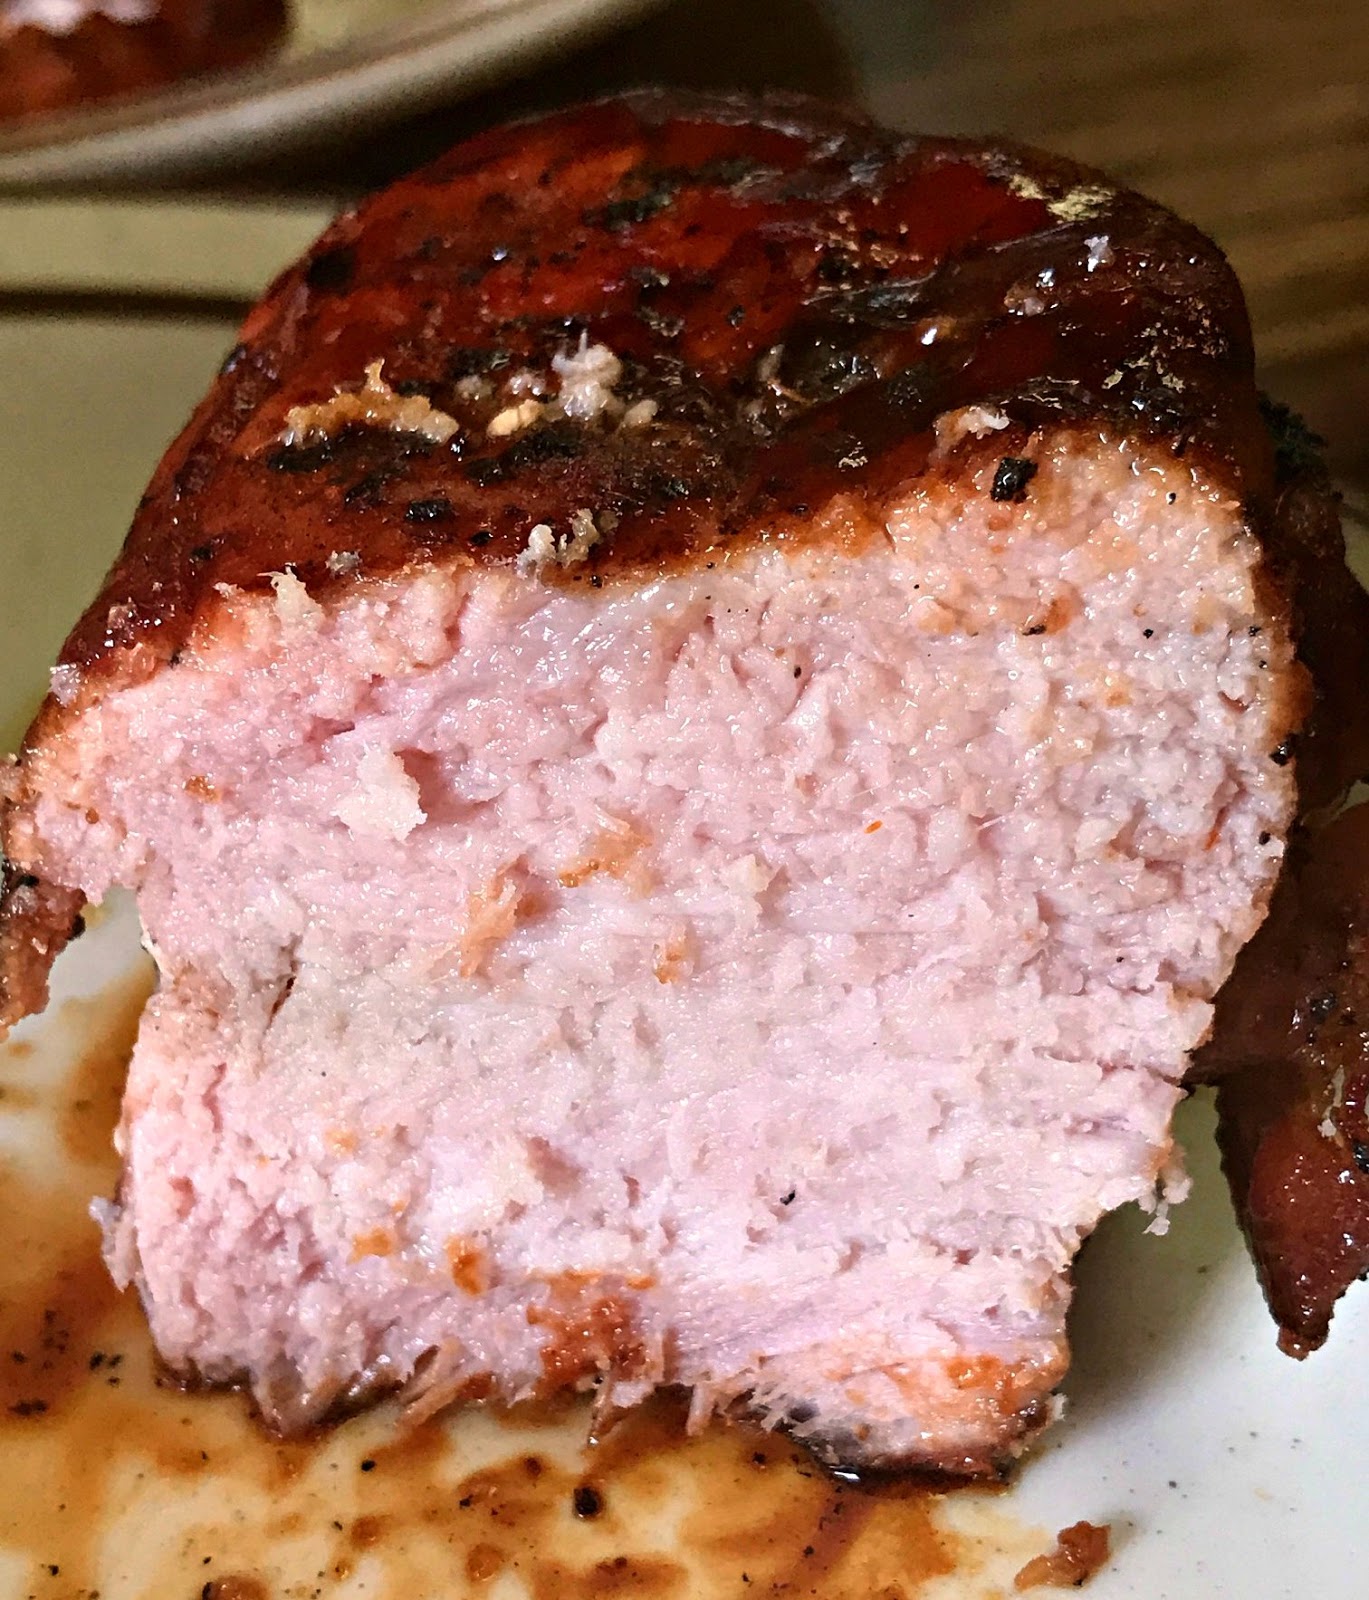 goshen smokehouse bacon brothers restaurant review